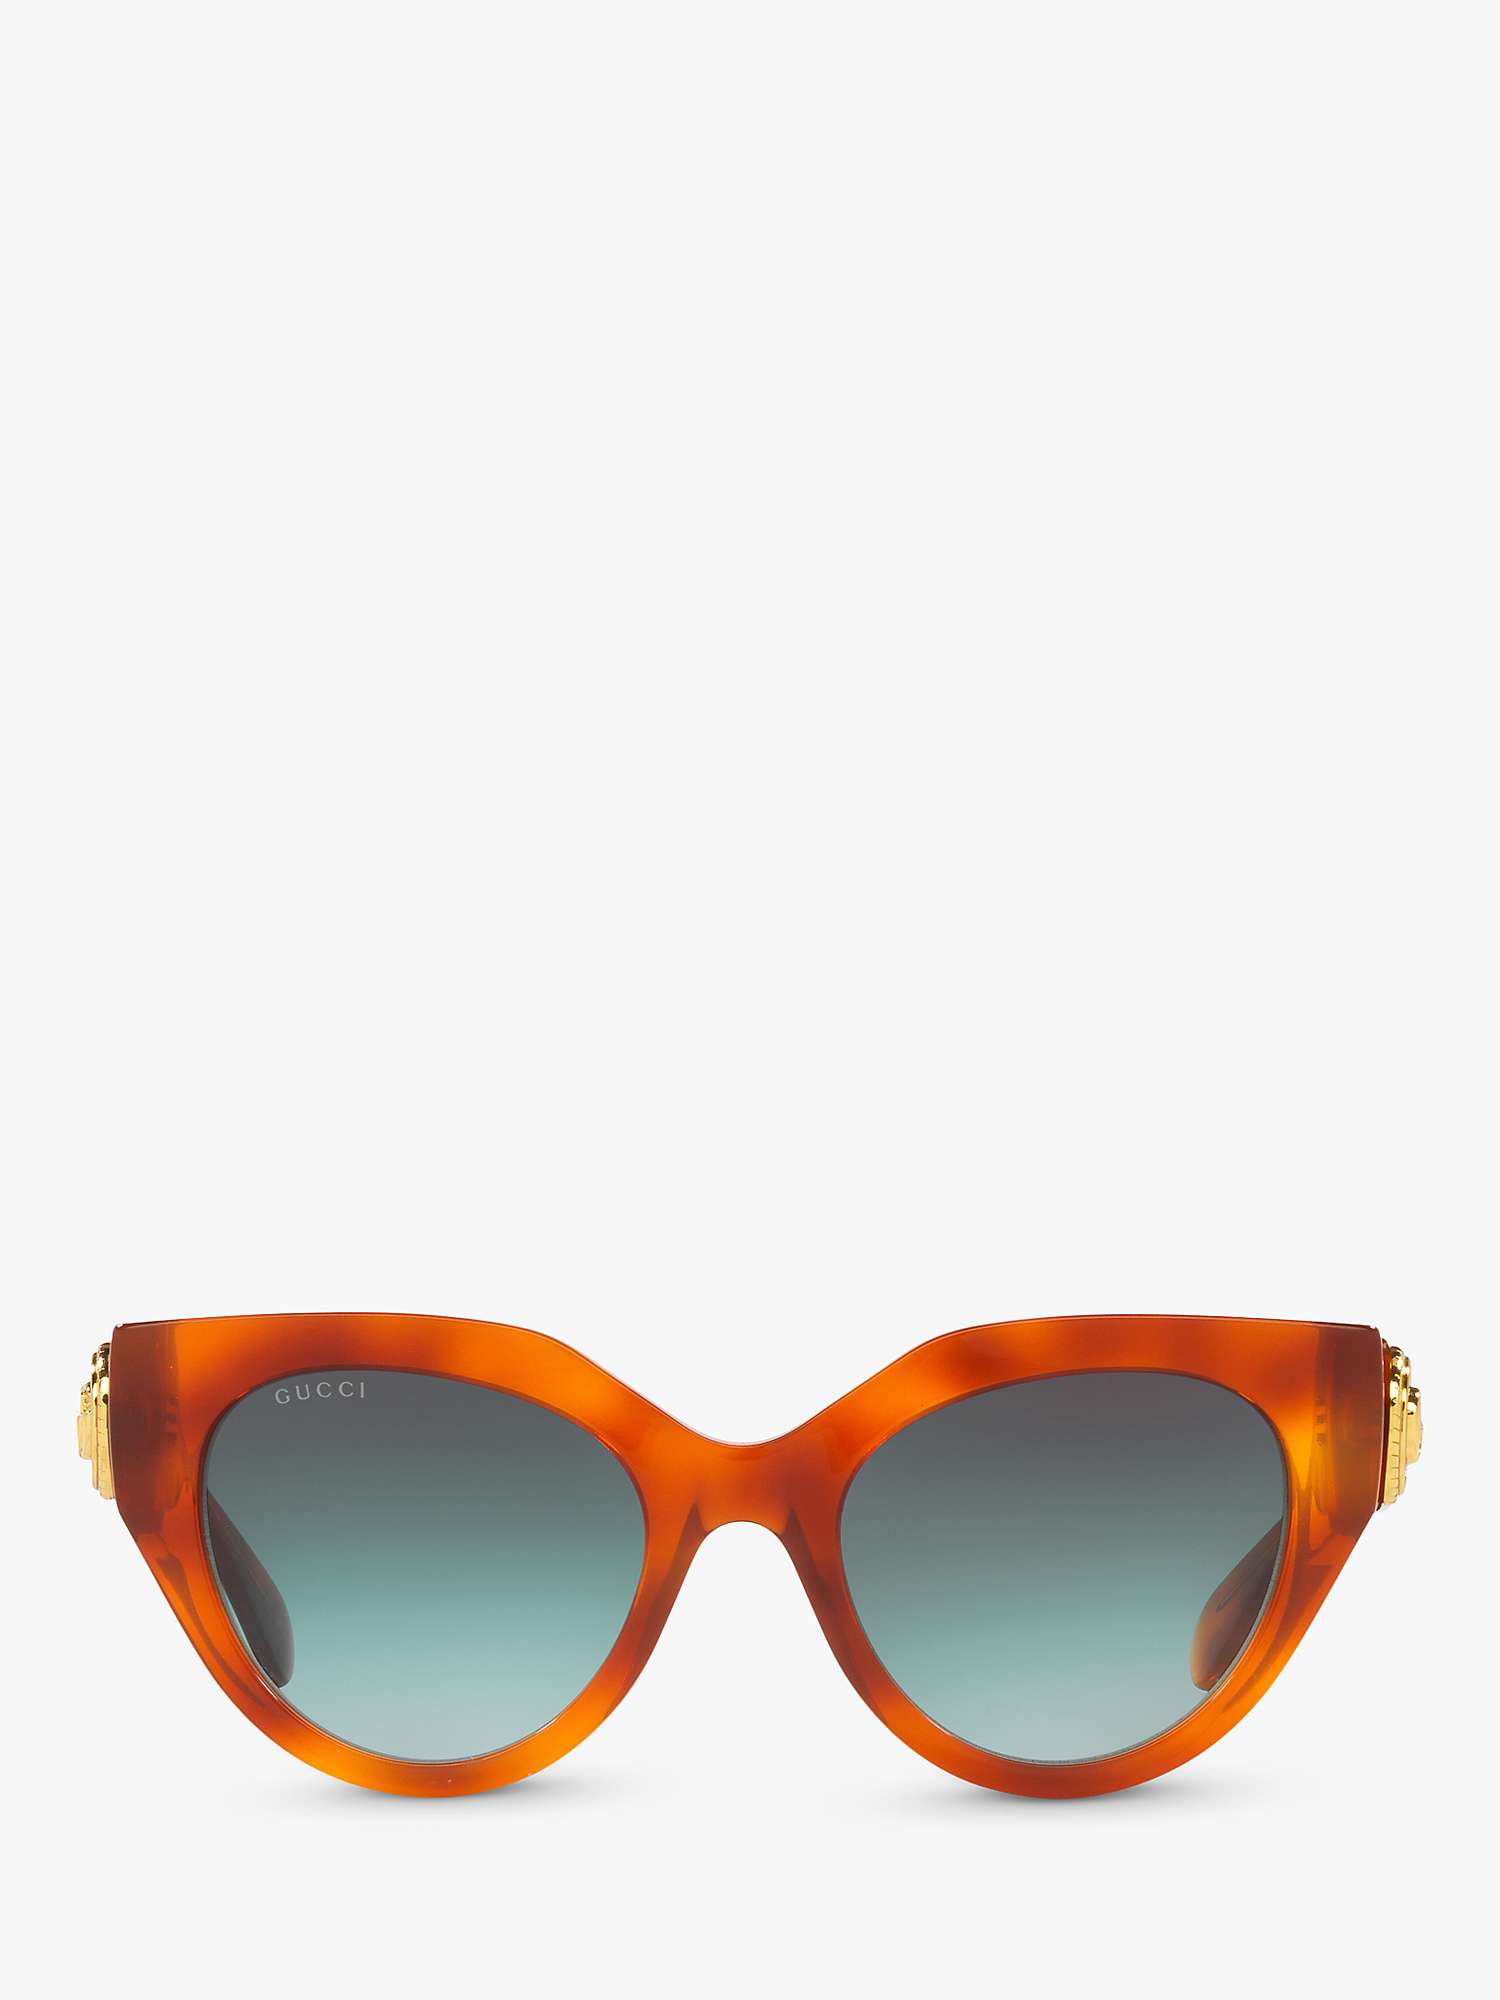 Buy Gucci GG1408S Women's Cat's Eye Sunglasses, Tortoise/Blue Gradient Online at johnlewis.com